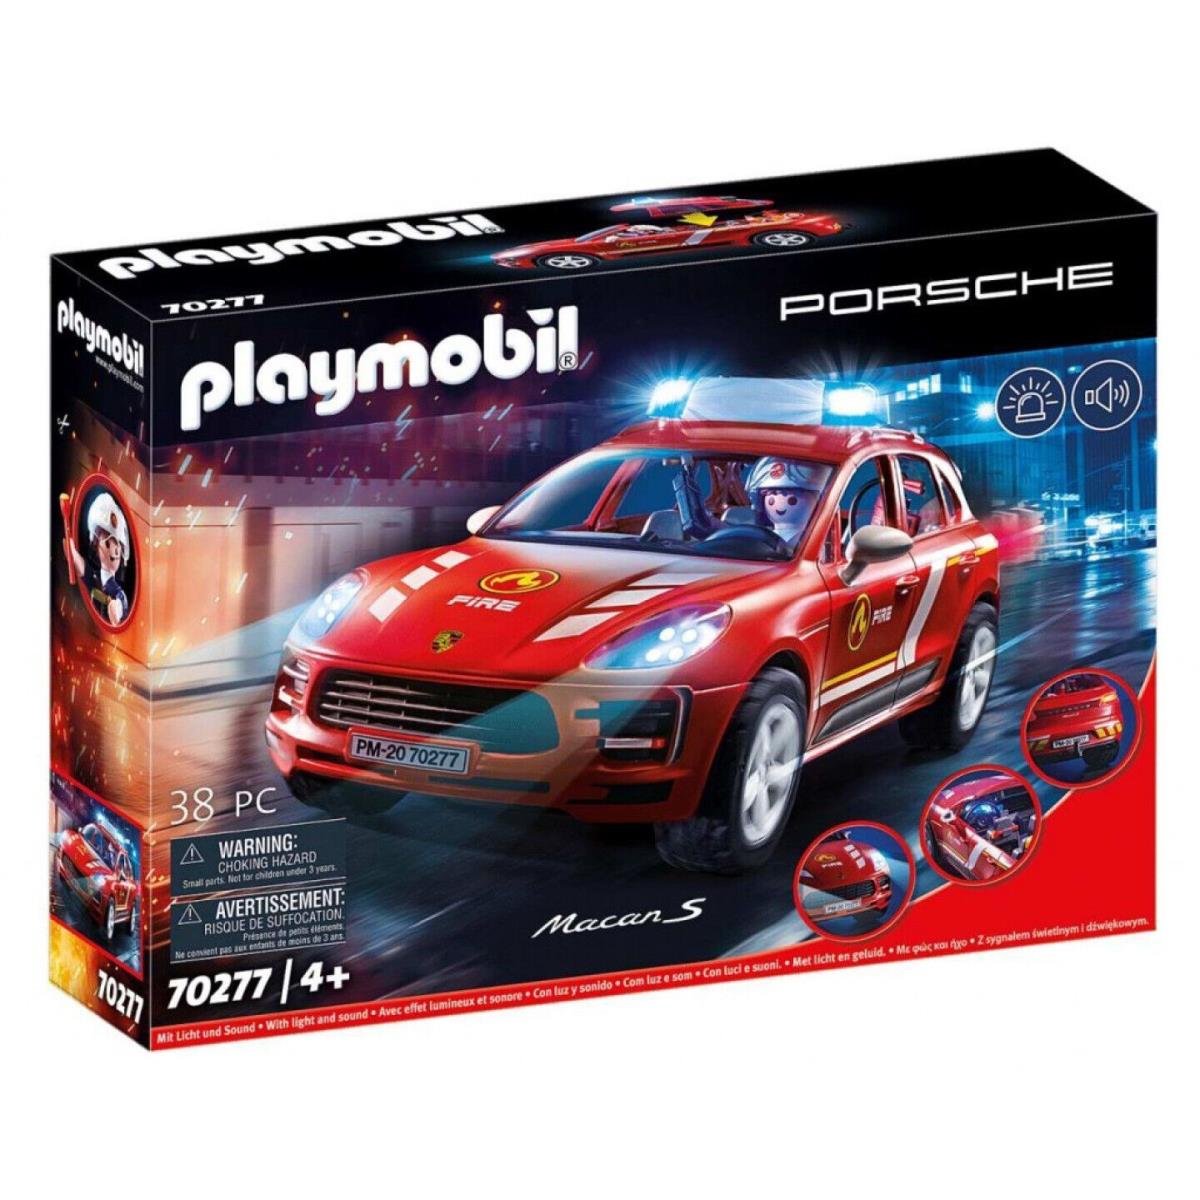 Playmobil 70277 Porsche Macan S Firefighter with Figurine Building Kit